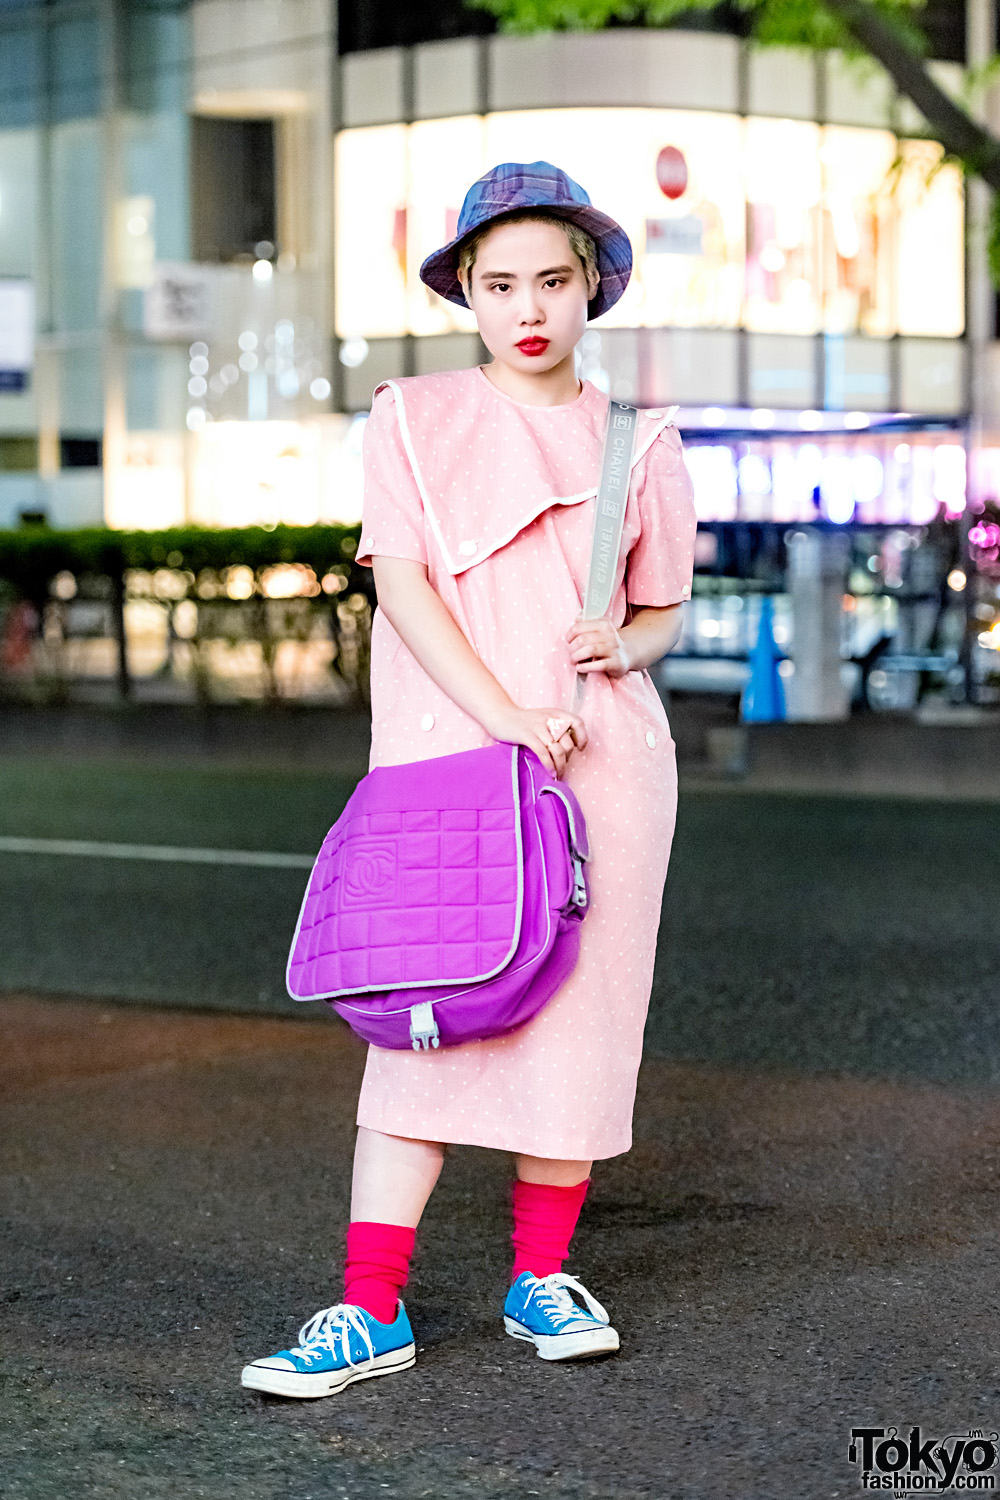 Retro Vintage Street Style in Harajuku w/ Polka Dot Dress, Converse Sneakers, Chanel Bag & Plaid Hat